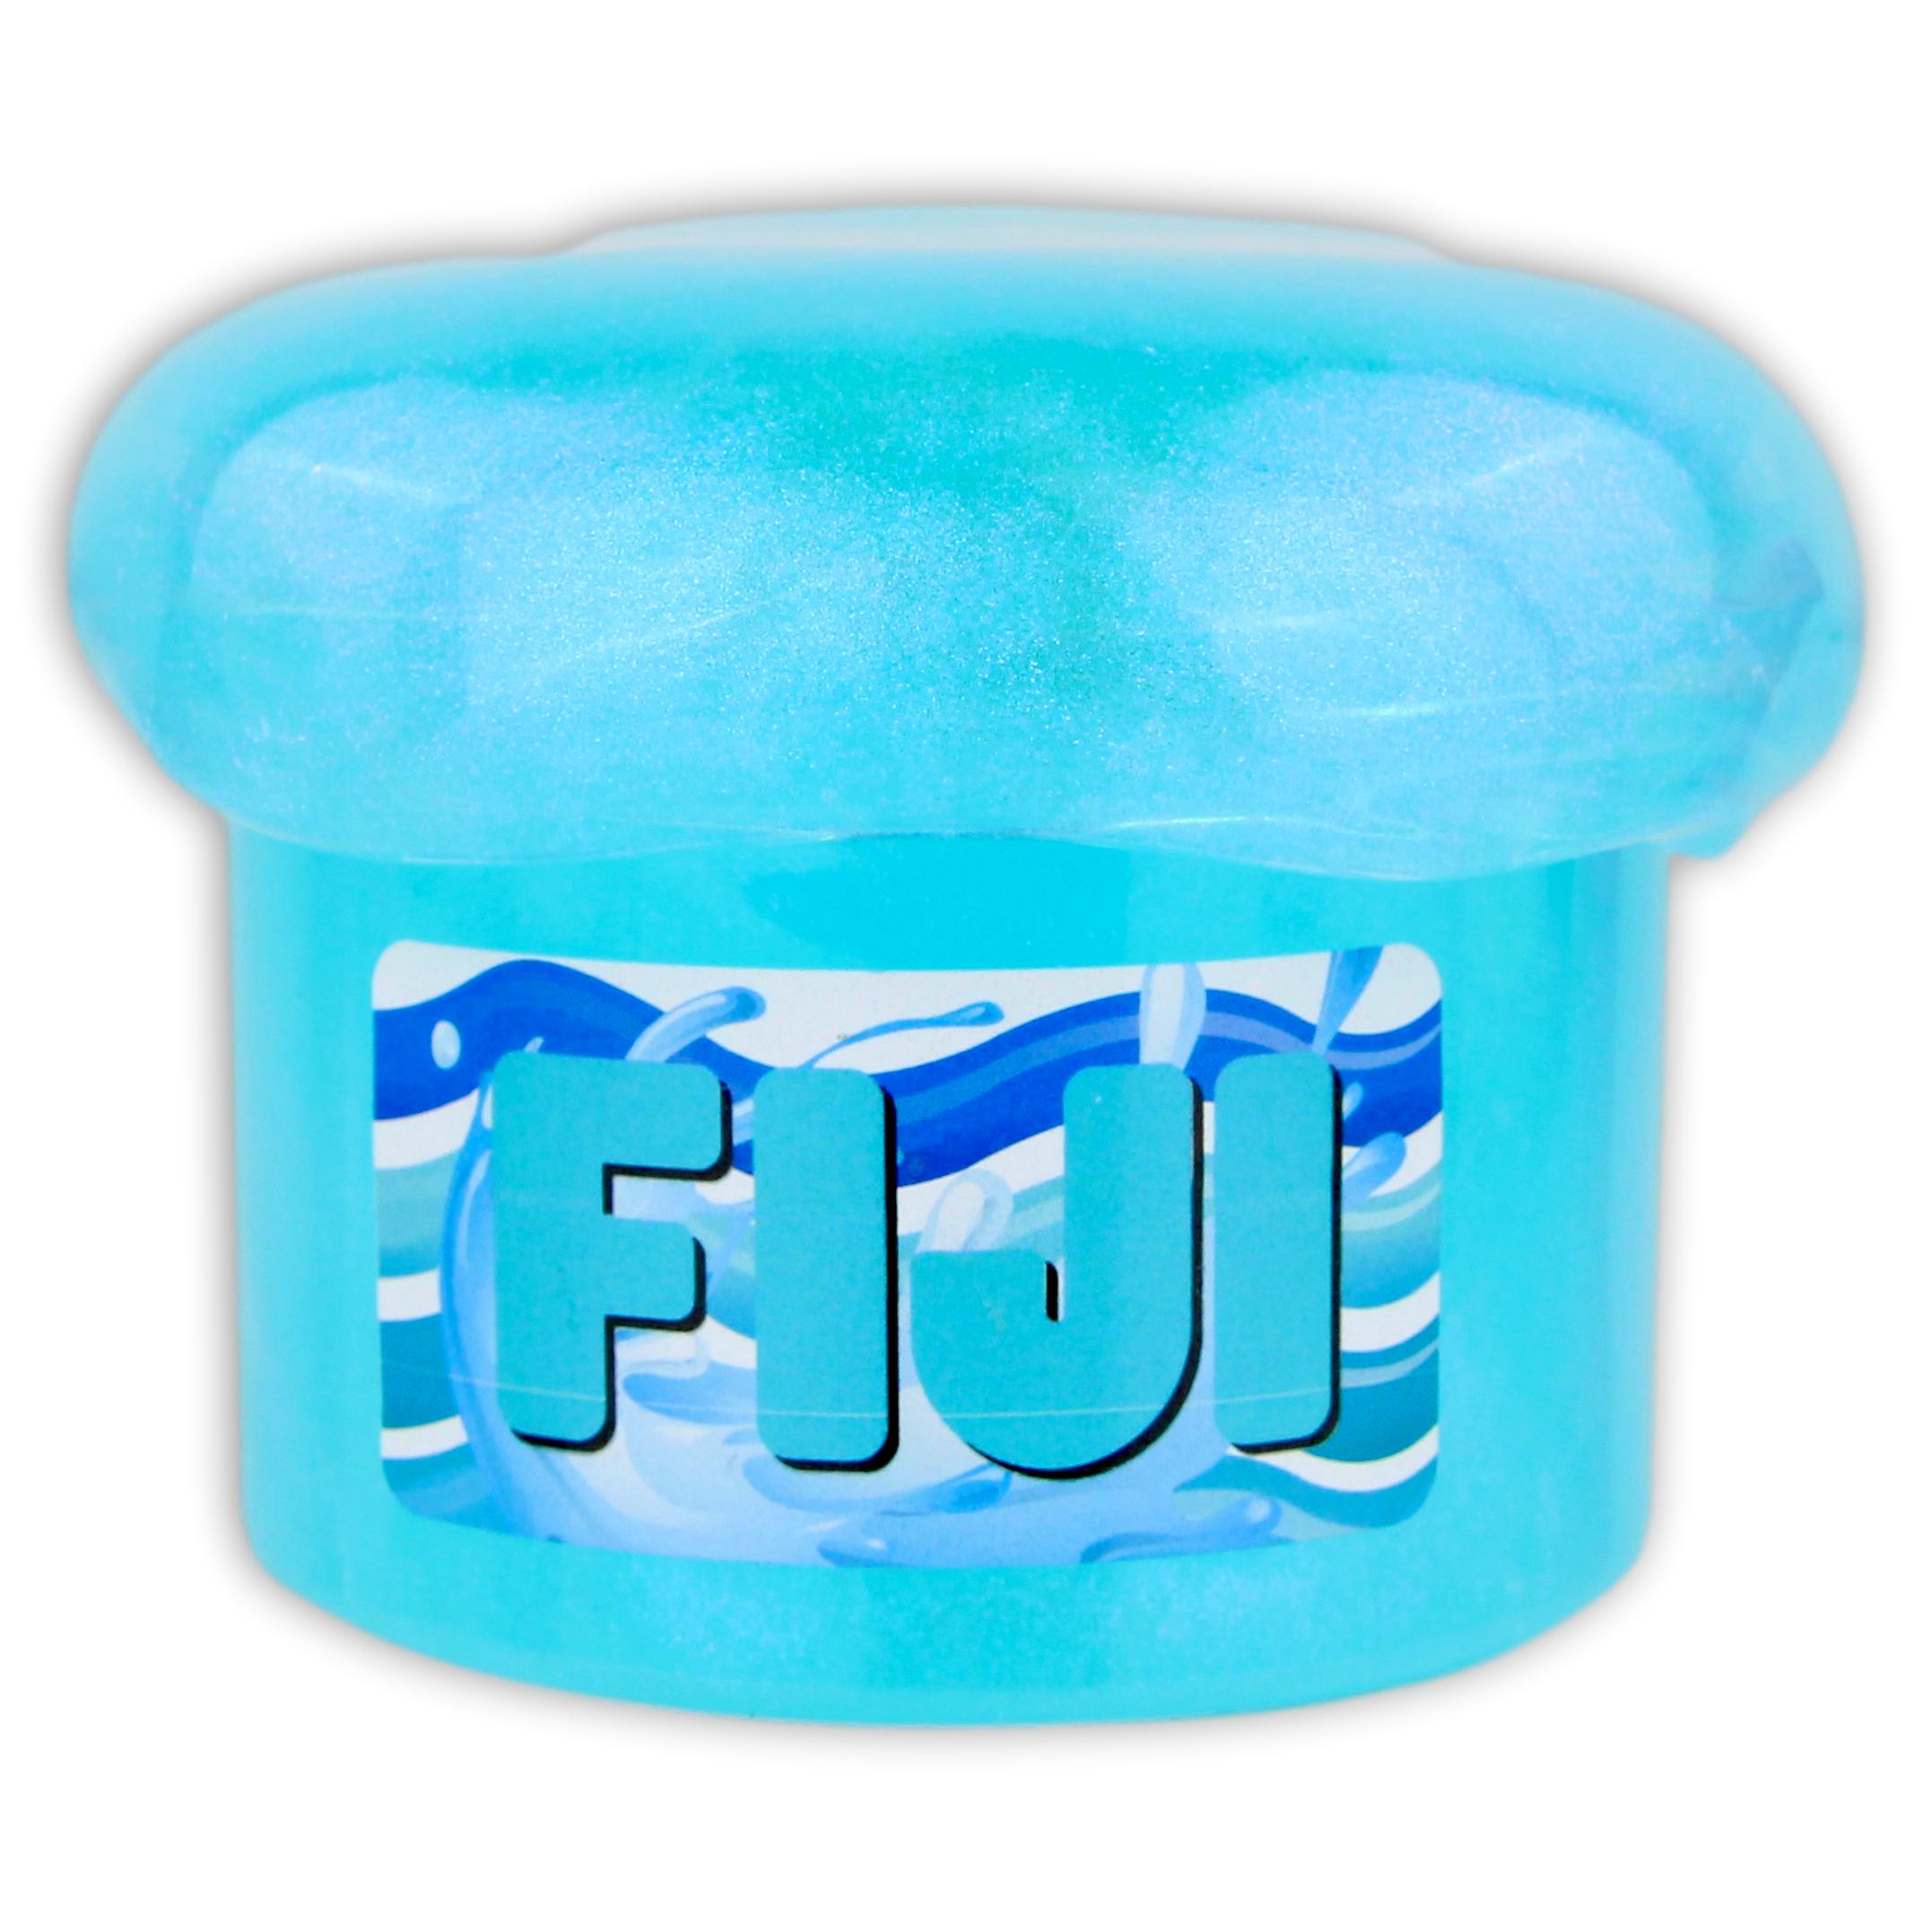 Fiji Crystal Clear Slime - Shop Slime - Dope Slimes